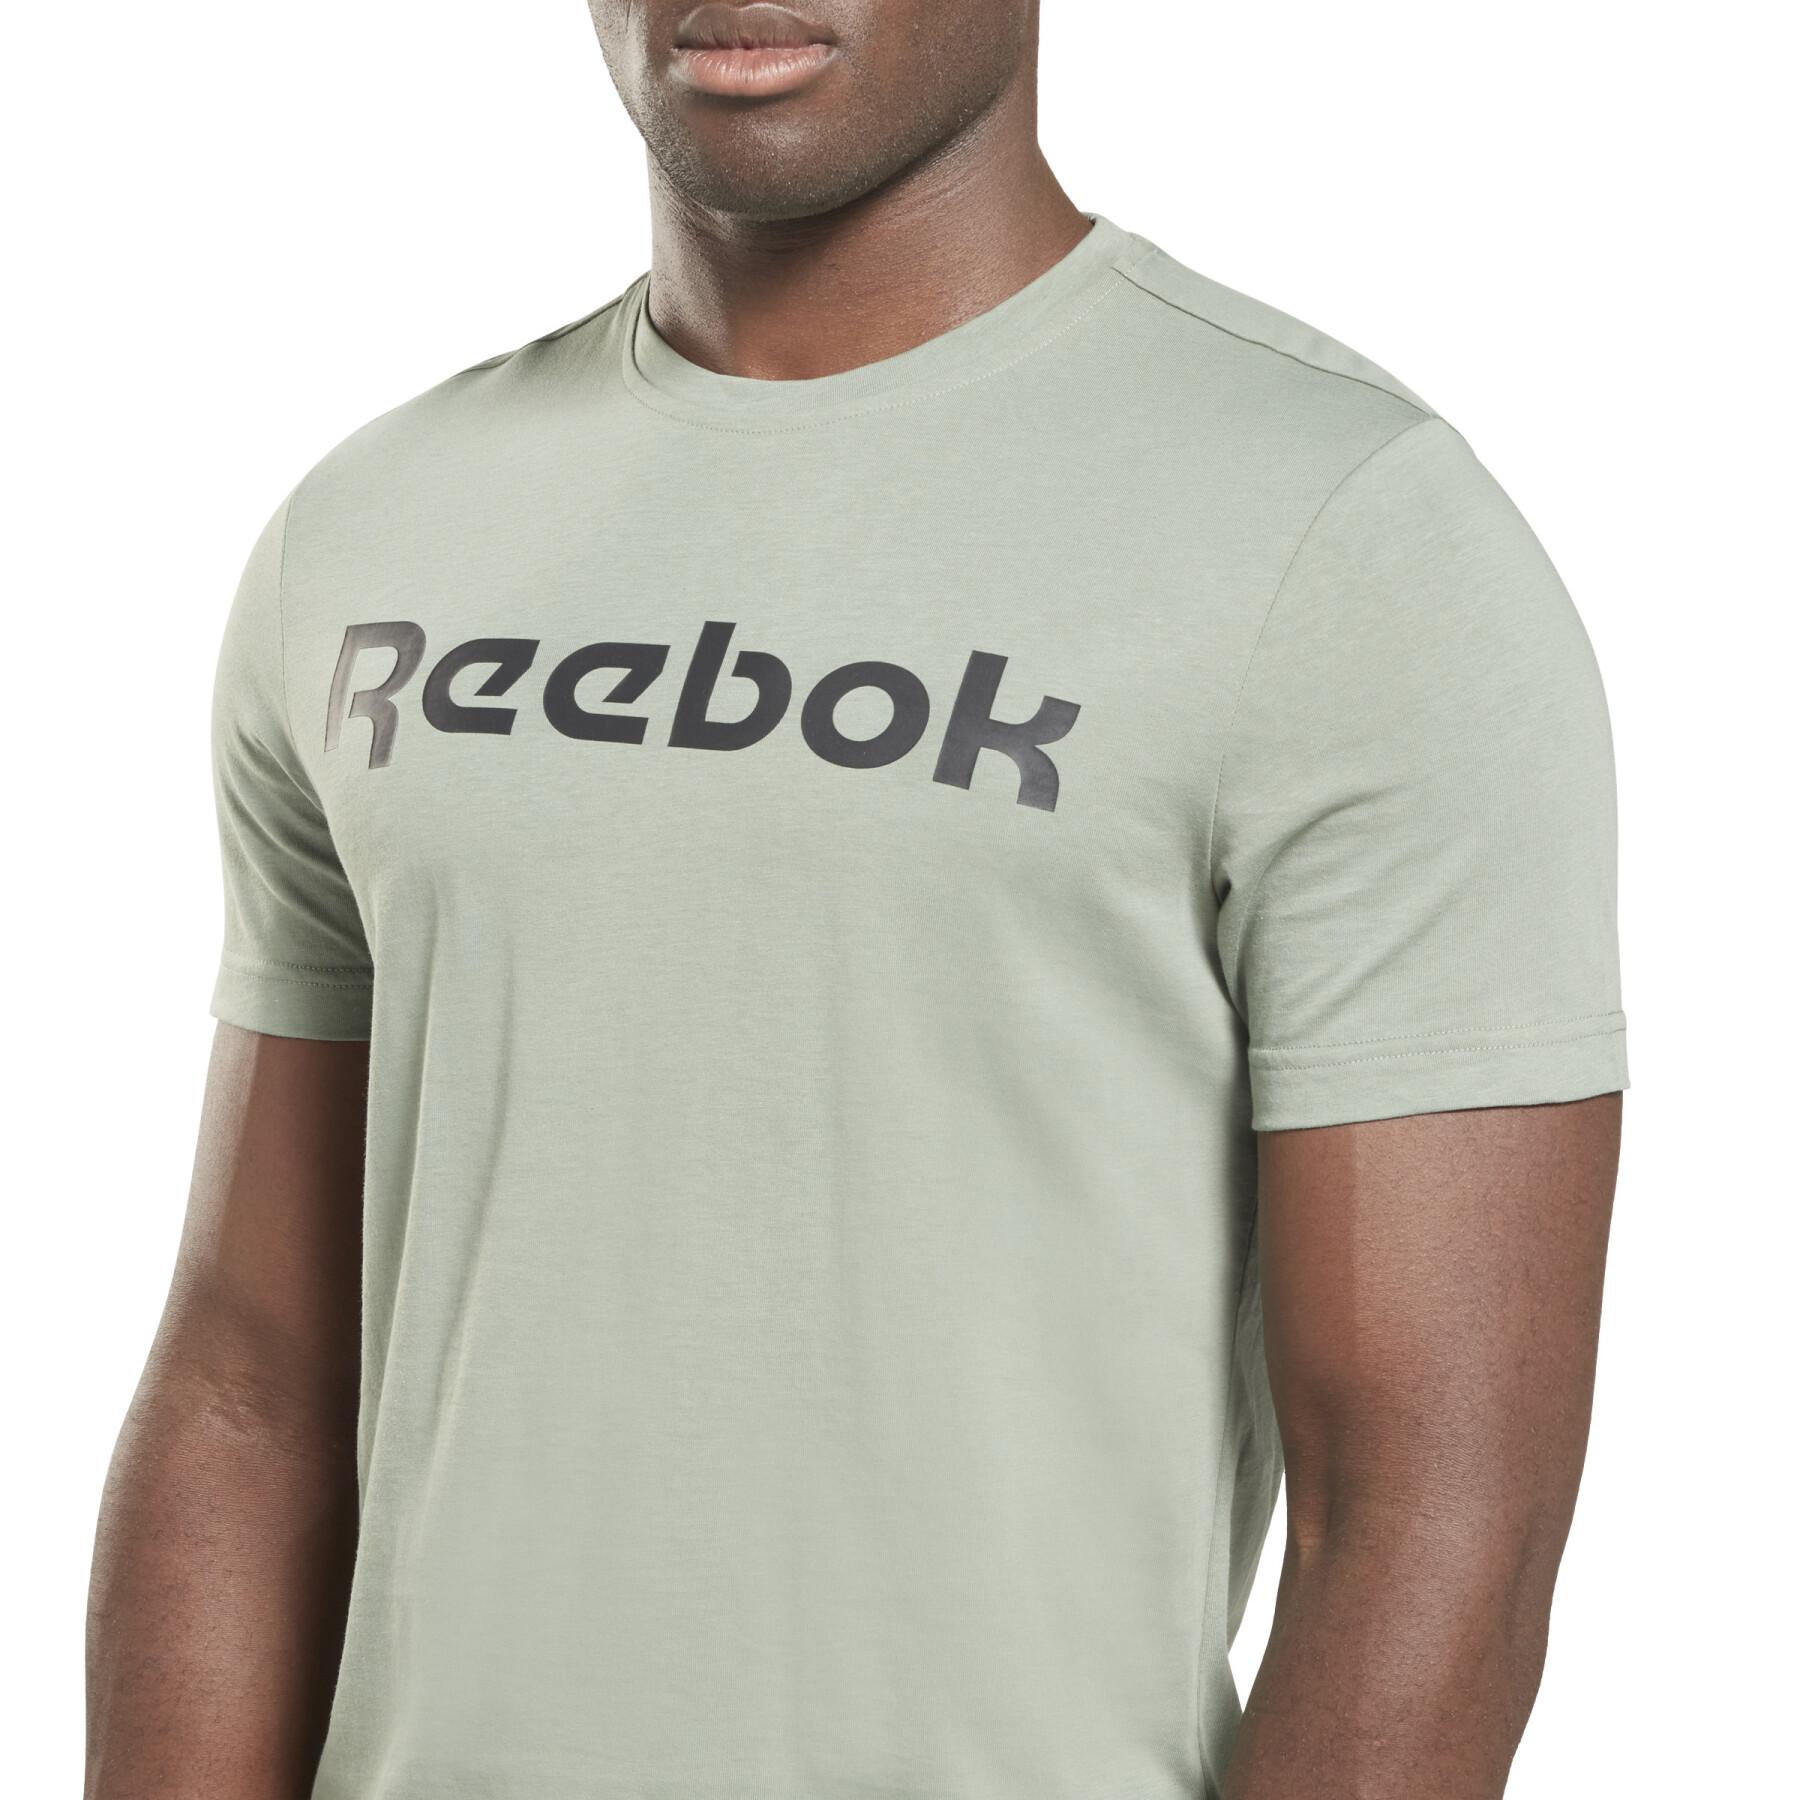 - T-shirt Men\'s Reebok Graphic - Clothing Linear Series Fitness - T-shirts Logo